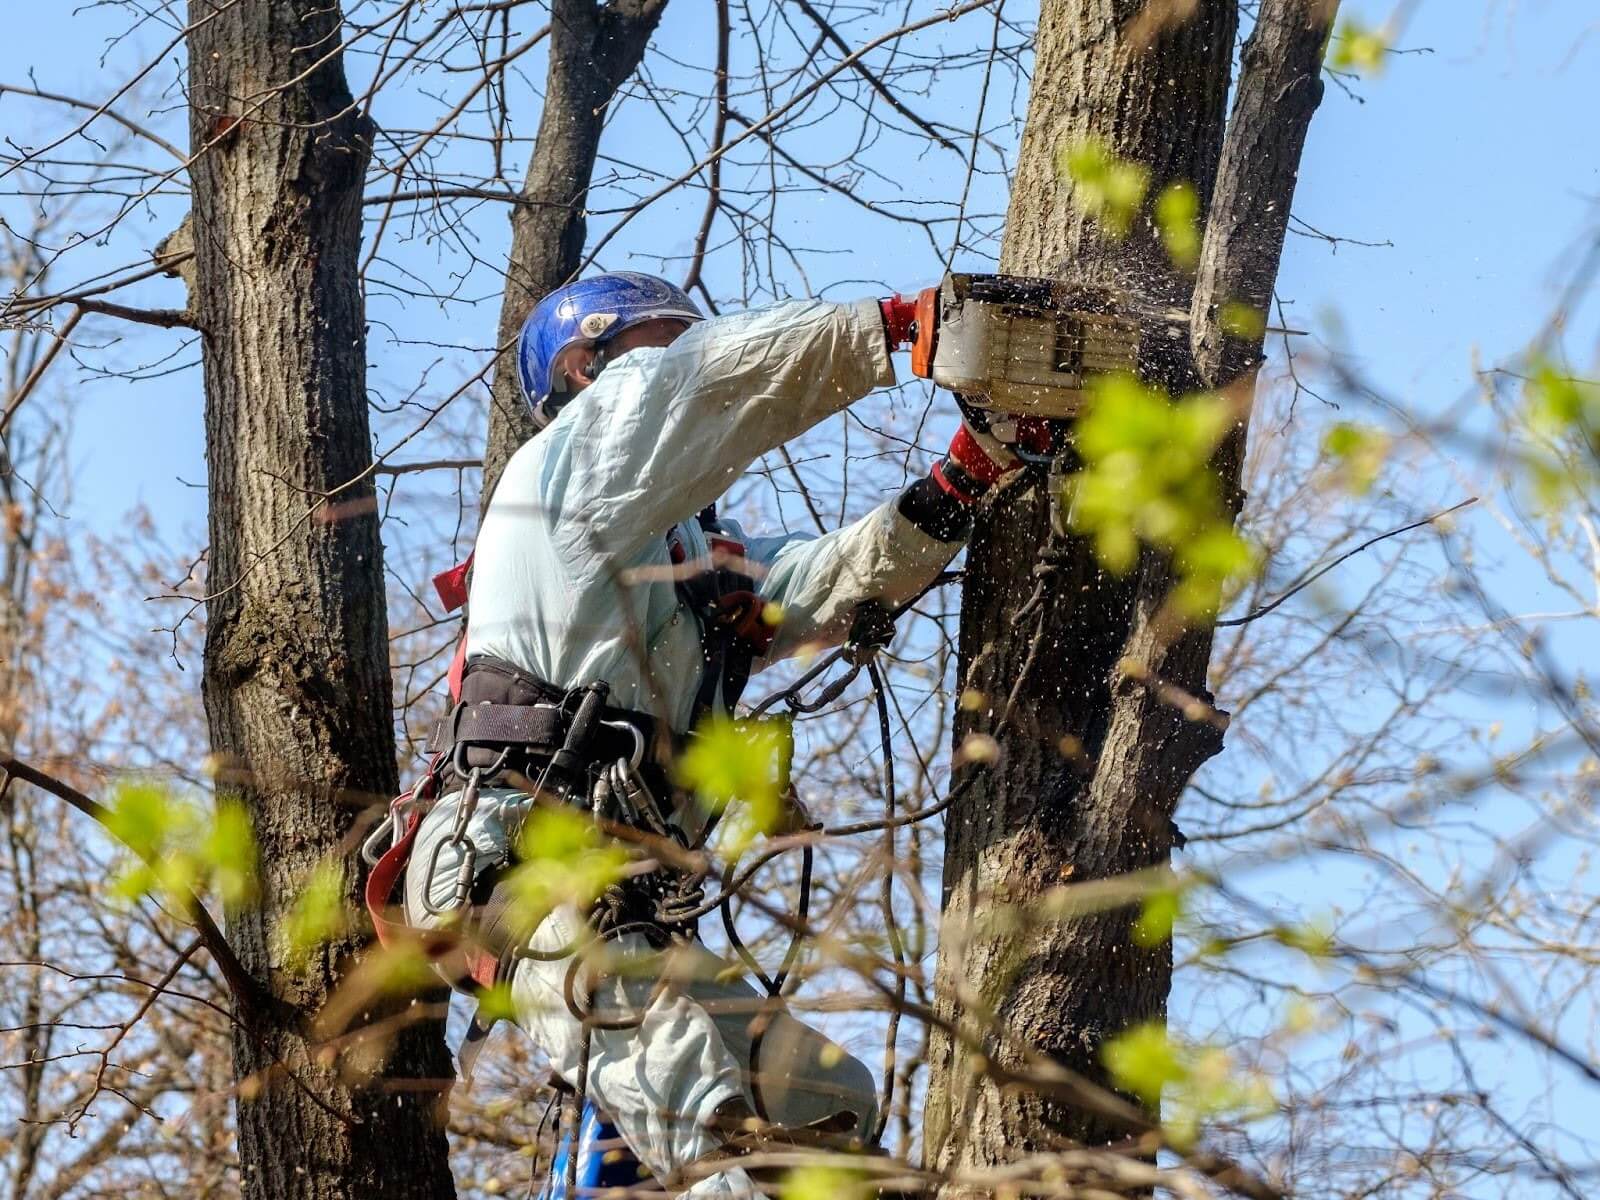 An arborist pruning a tree